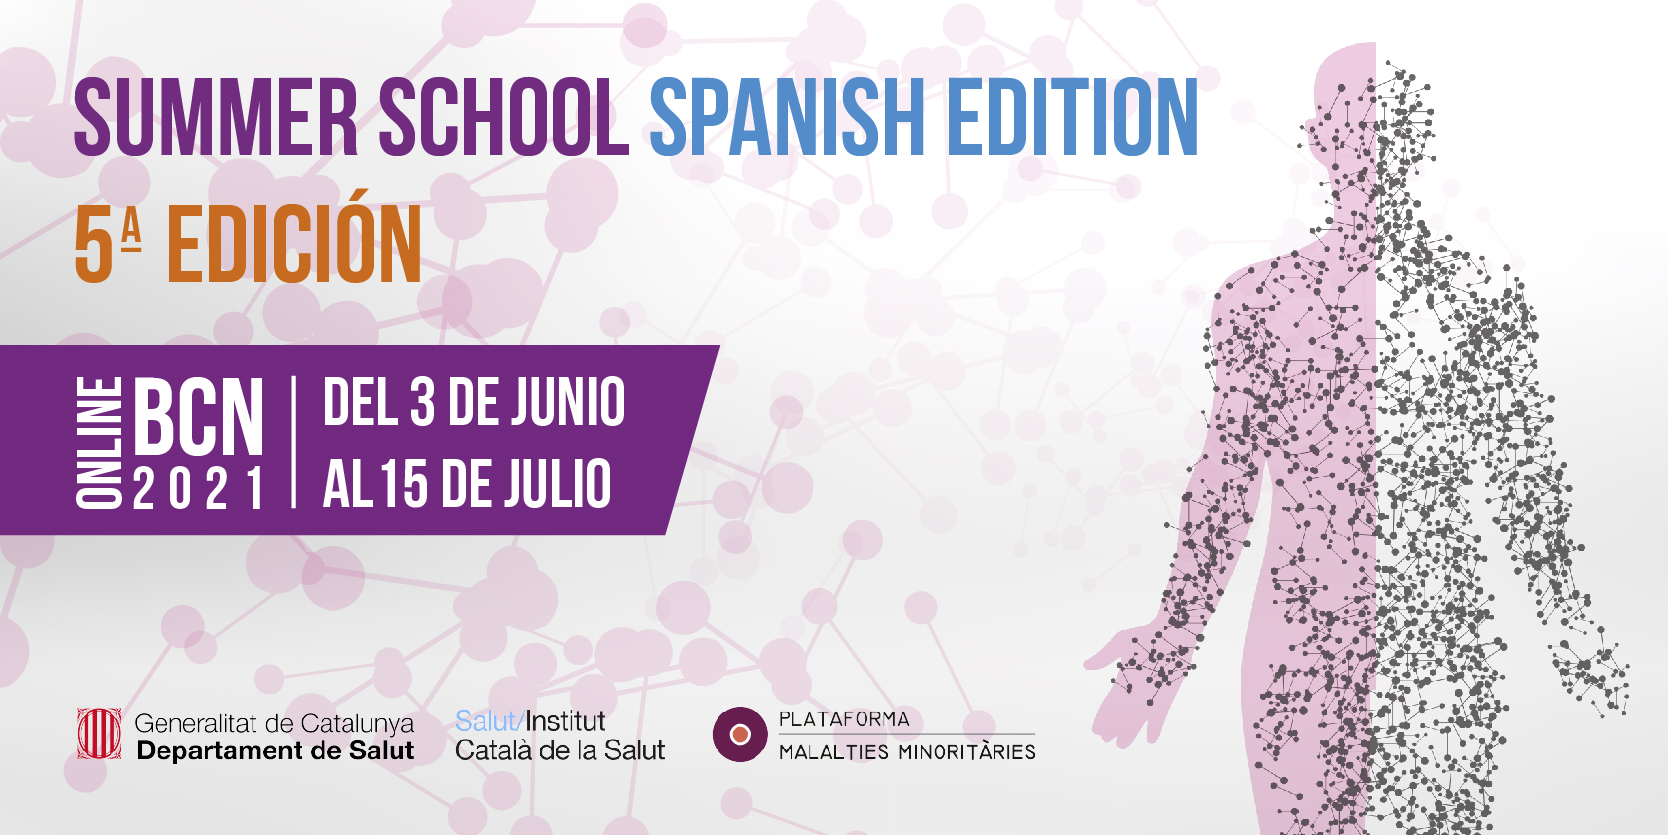 Summer_School_Spanish_Edition_imatge_online_2021_P